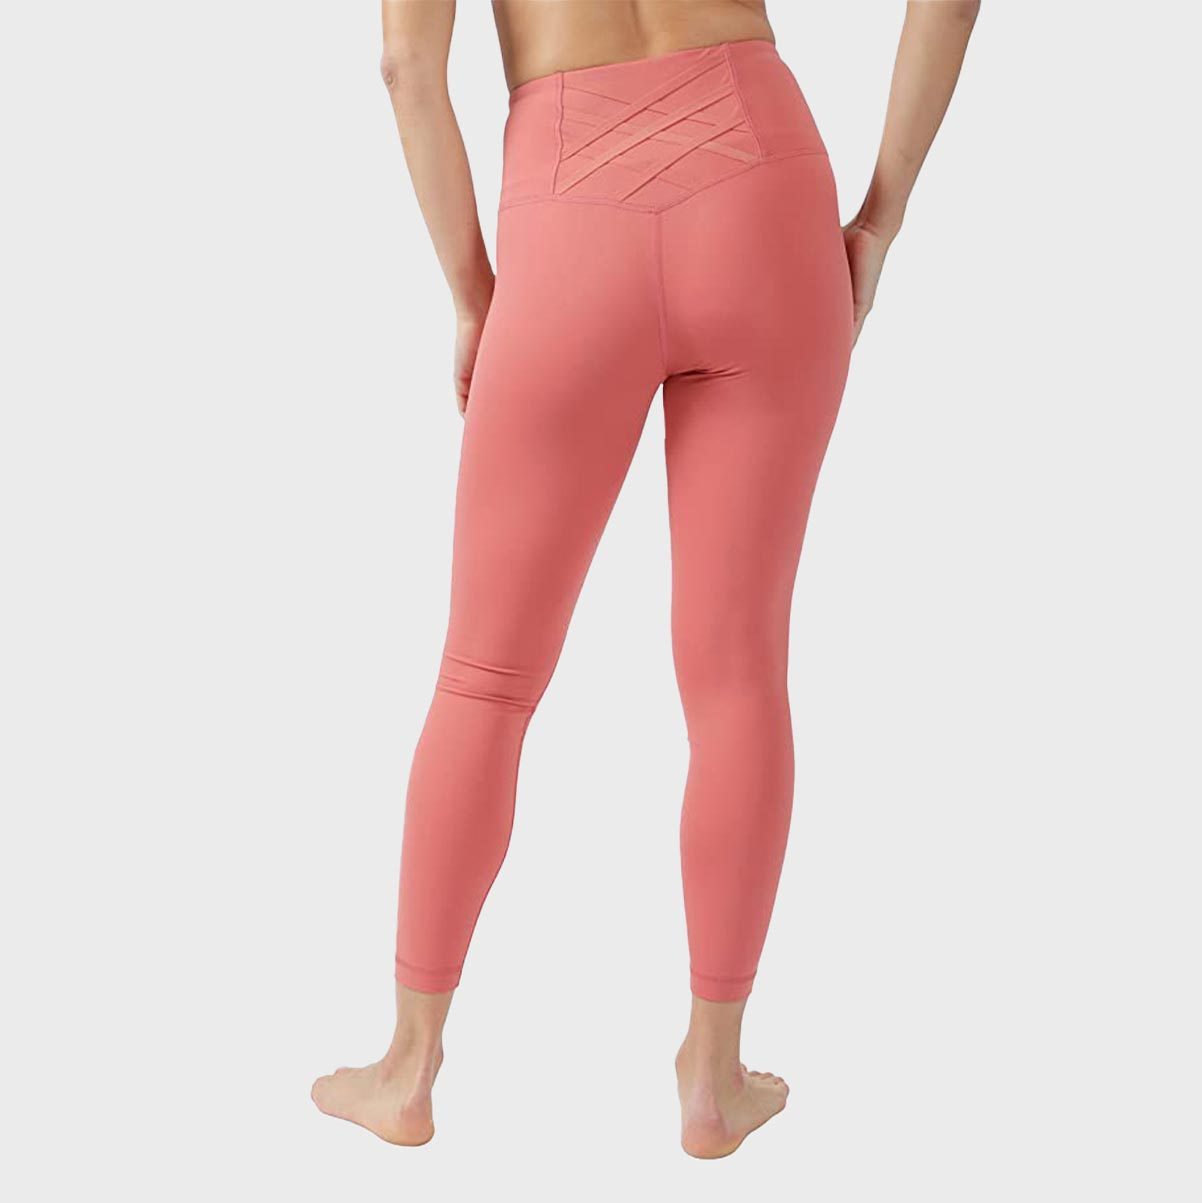 2021 New Famous TikTok Leggings High Waist Yoga Pants for Women Booty  Bubble Butt Lifting Workout XS-XXXL